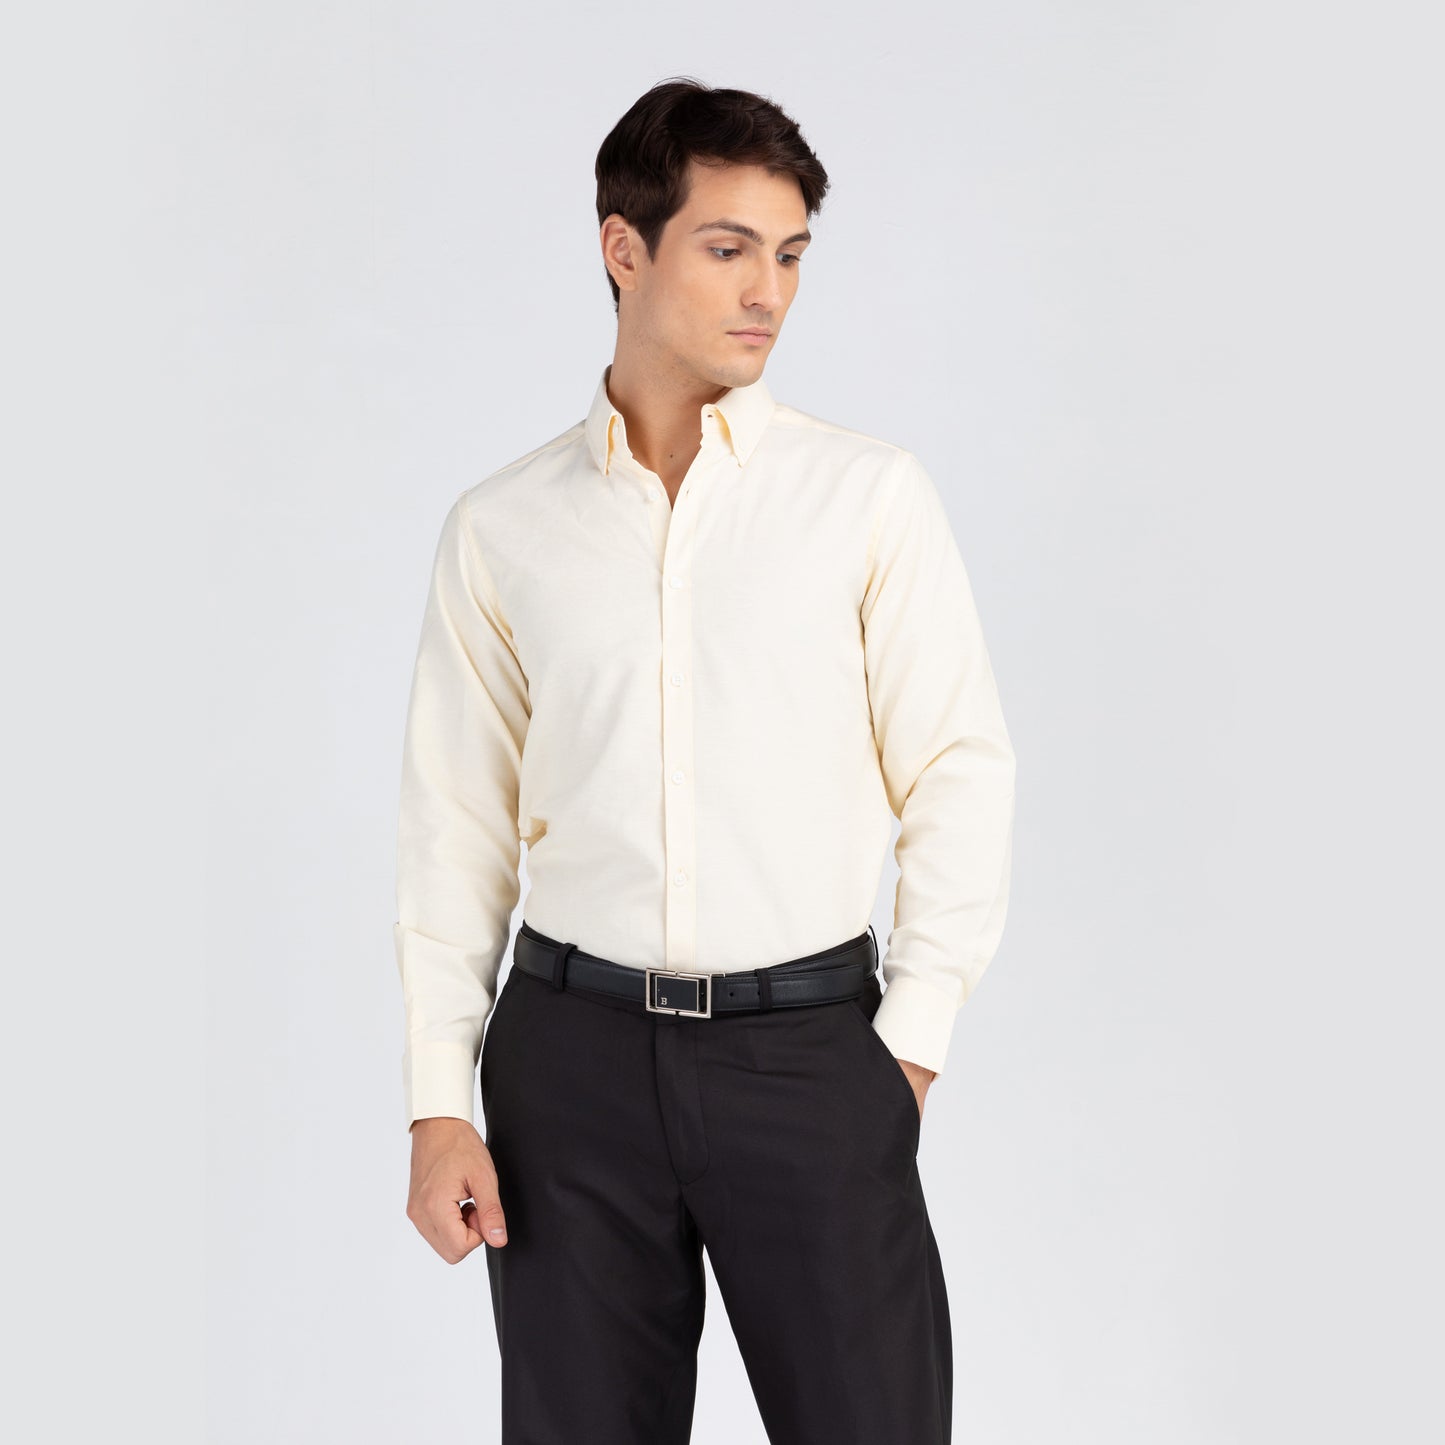 Mens REGULAR FIT Oxford Series Button Down Long Sleeve LIGHT YELLOW Shirt - IDENTITY Apparel Shop